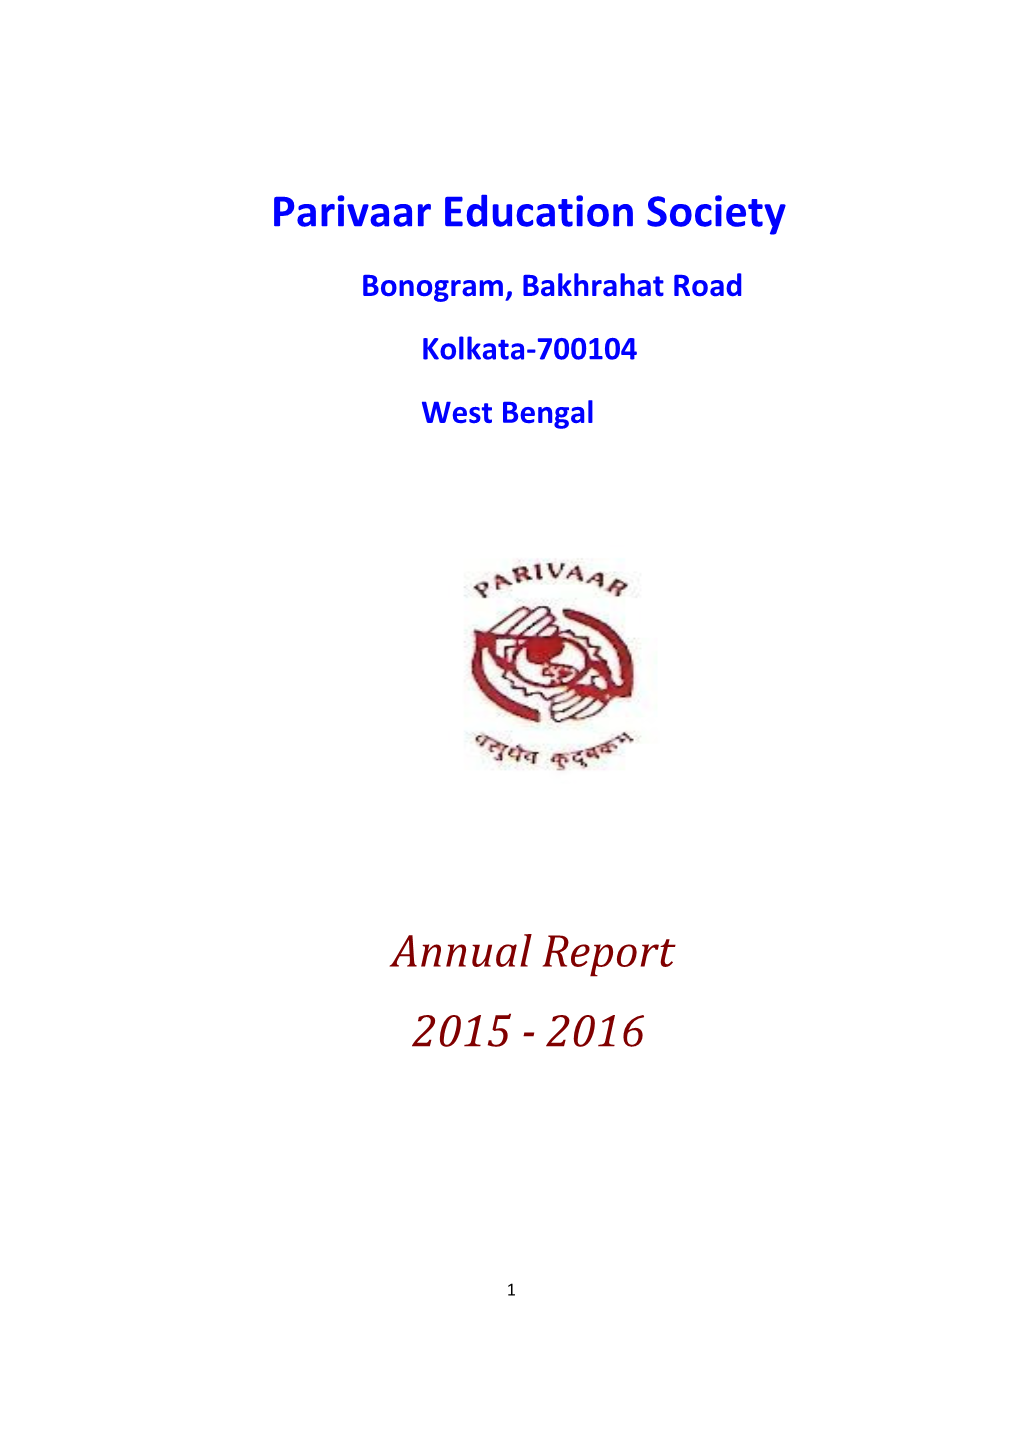 Parivaar Education Society Annual Report 2015